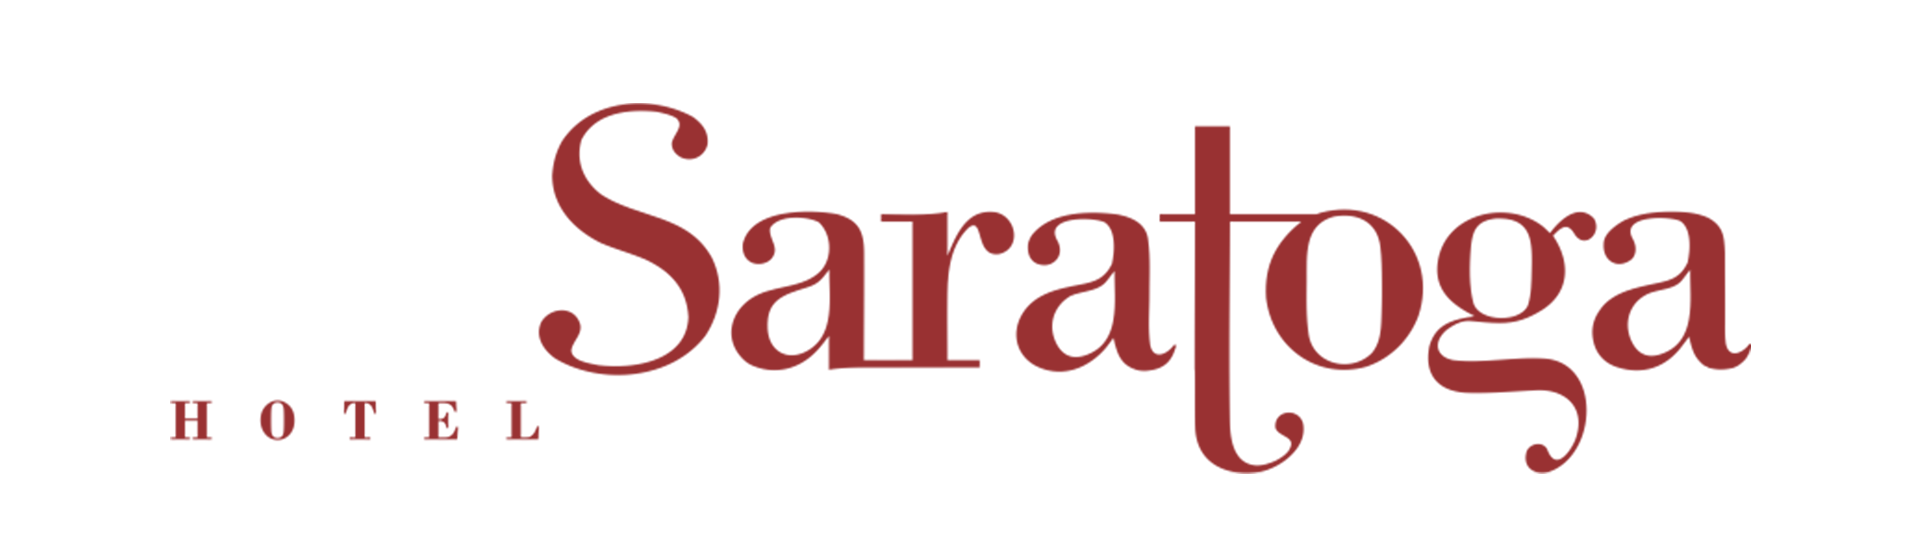 Логотип Отеля Saratoga Cuba